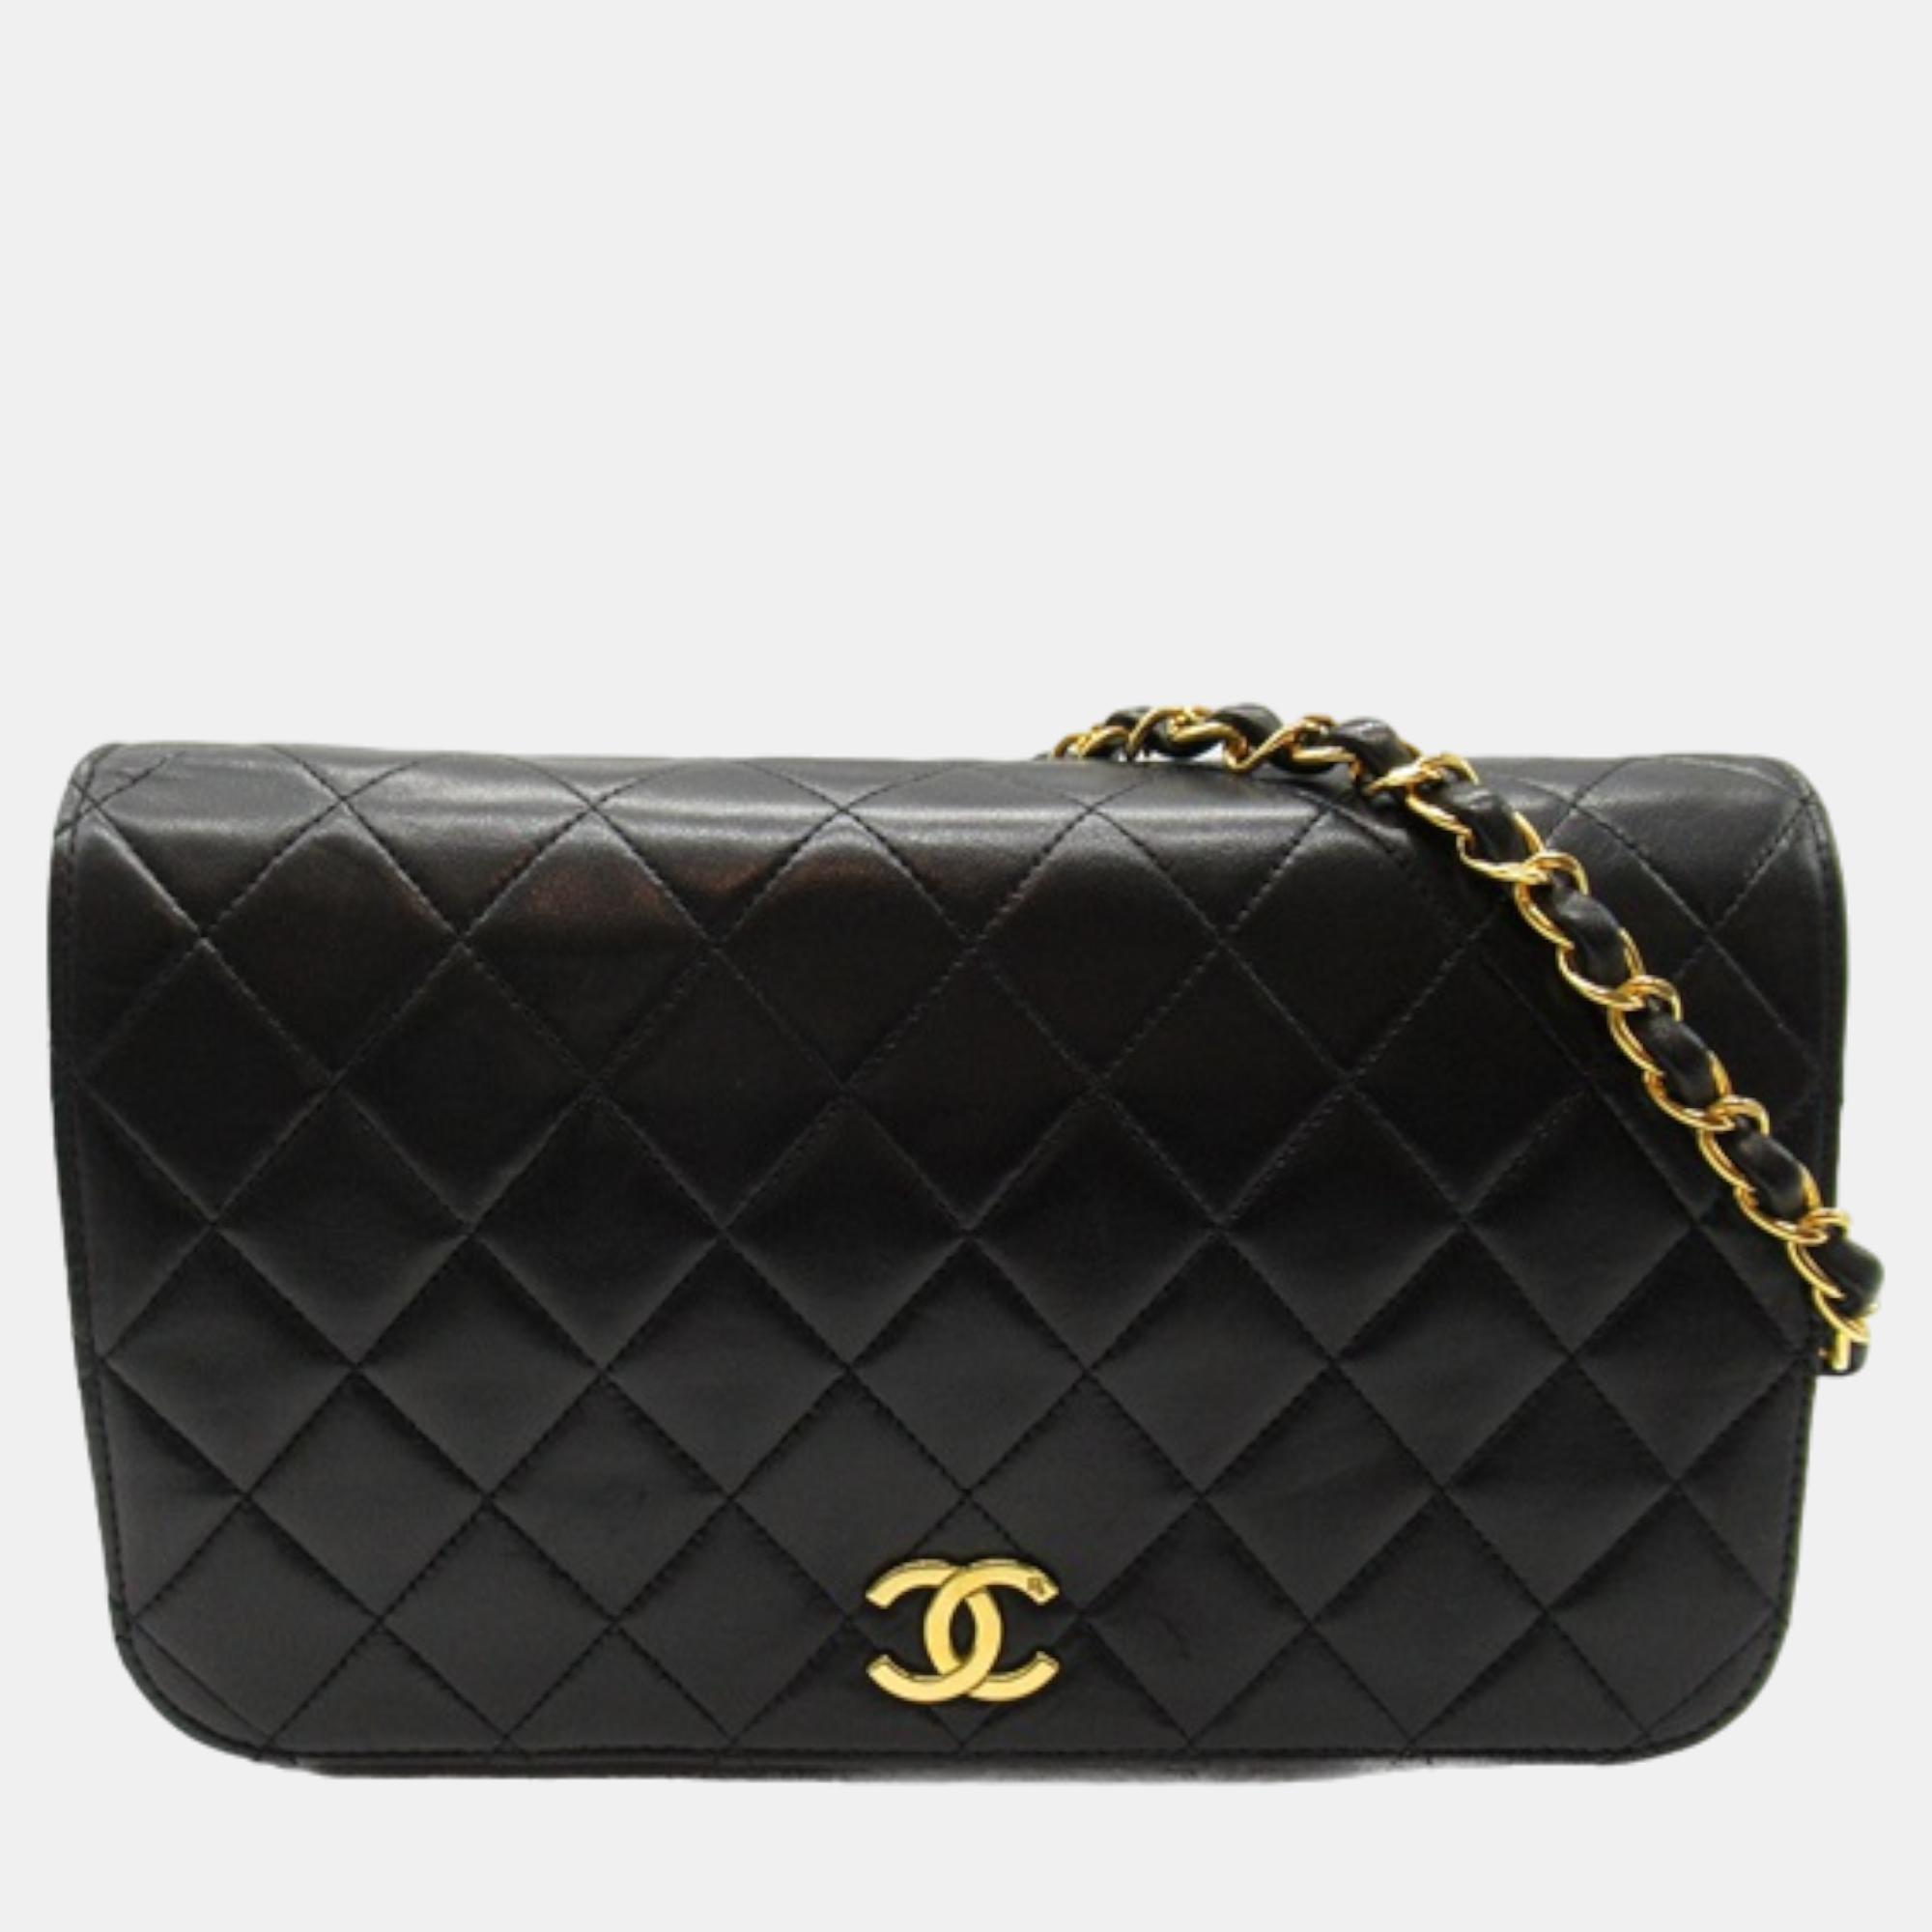 Chanel black leather cc matelasse full flap bag